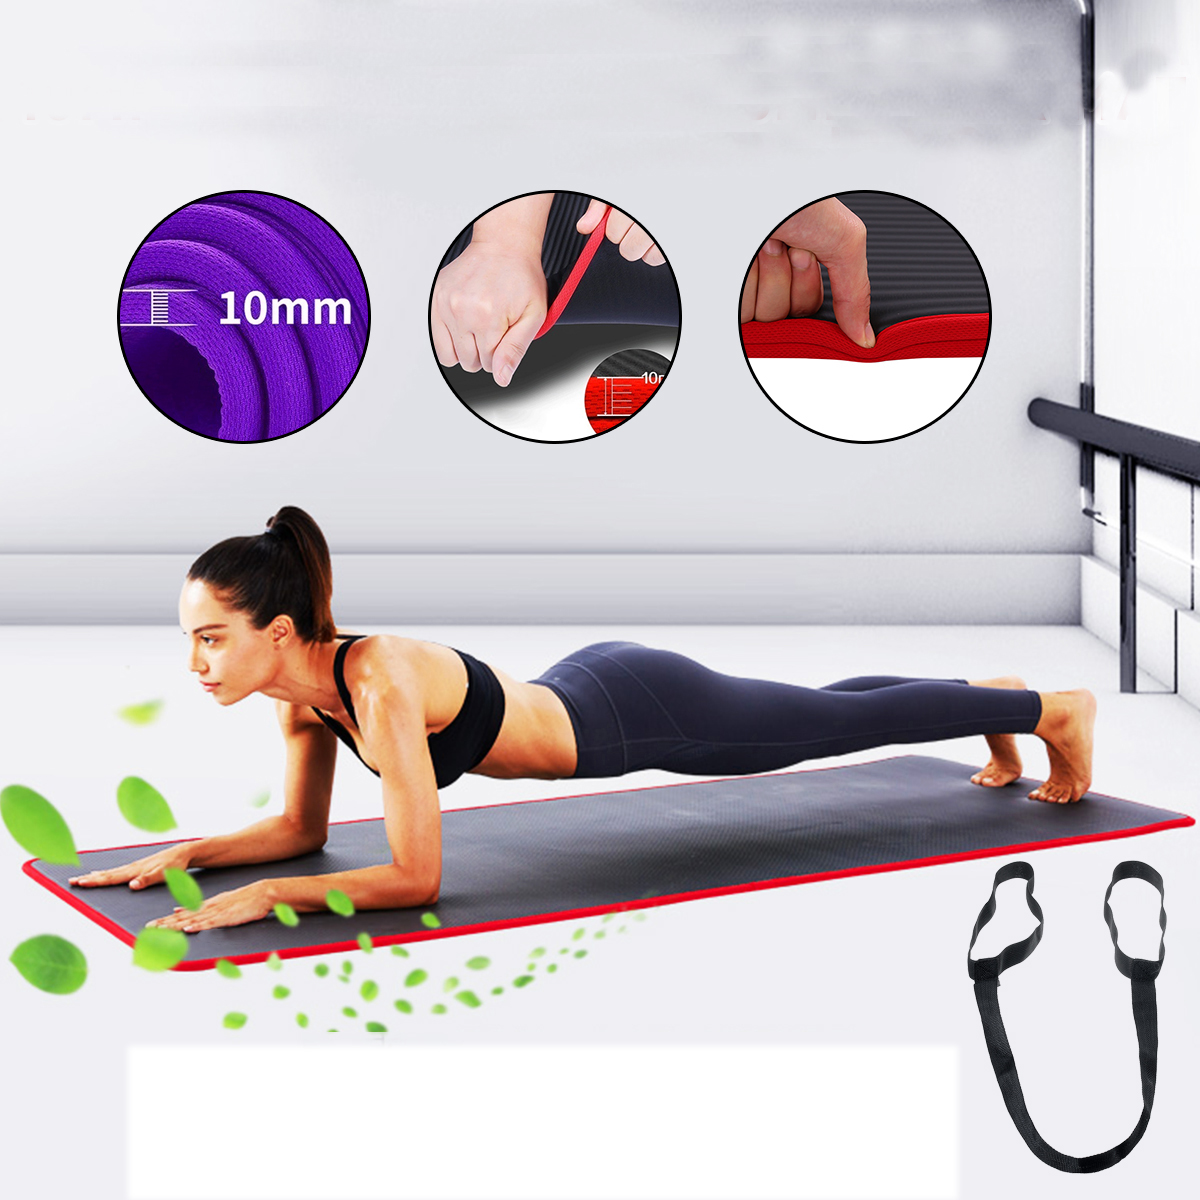 KALOAD 10mm Thick Yoga Mat Comfortable Non-slip Exercise Training Pad Gymnastics Fitness Foam Mats